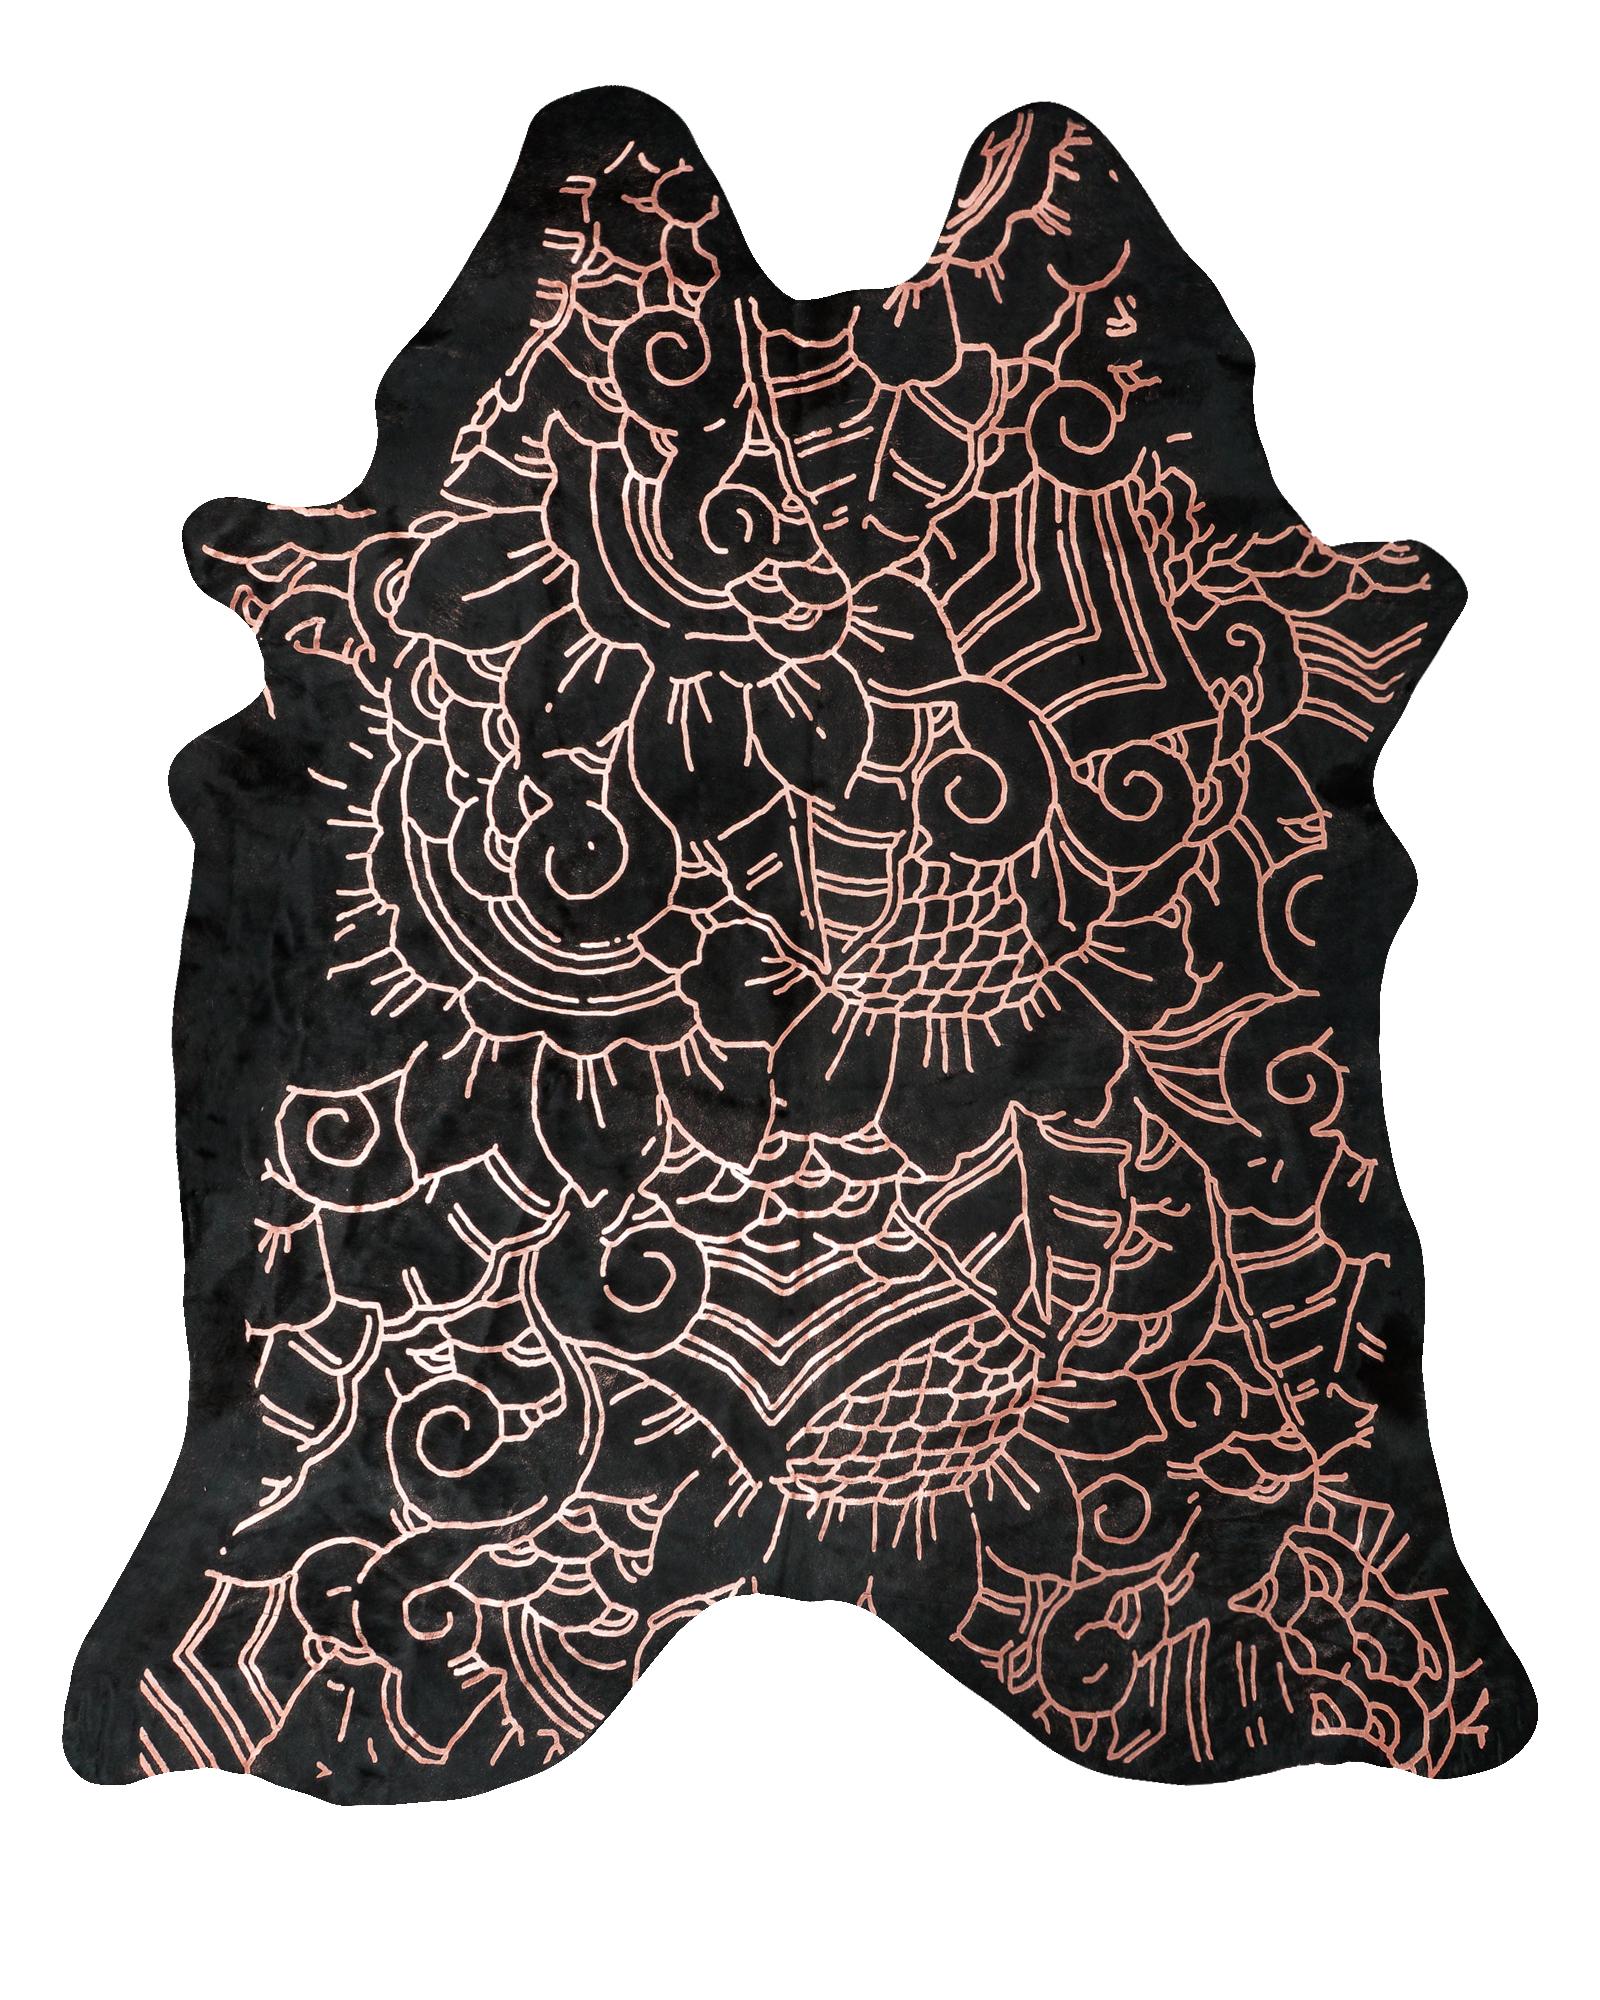 Art Deco Copper Metallic Boho Batik Pattern Black Cowhide Rug, Medium For Sale